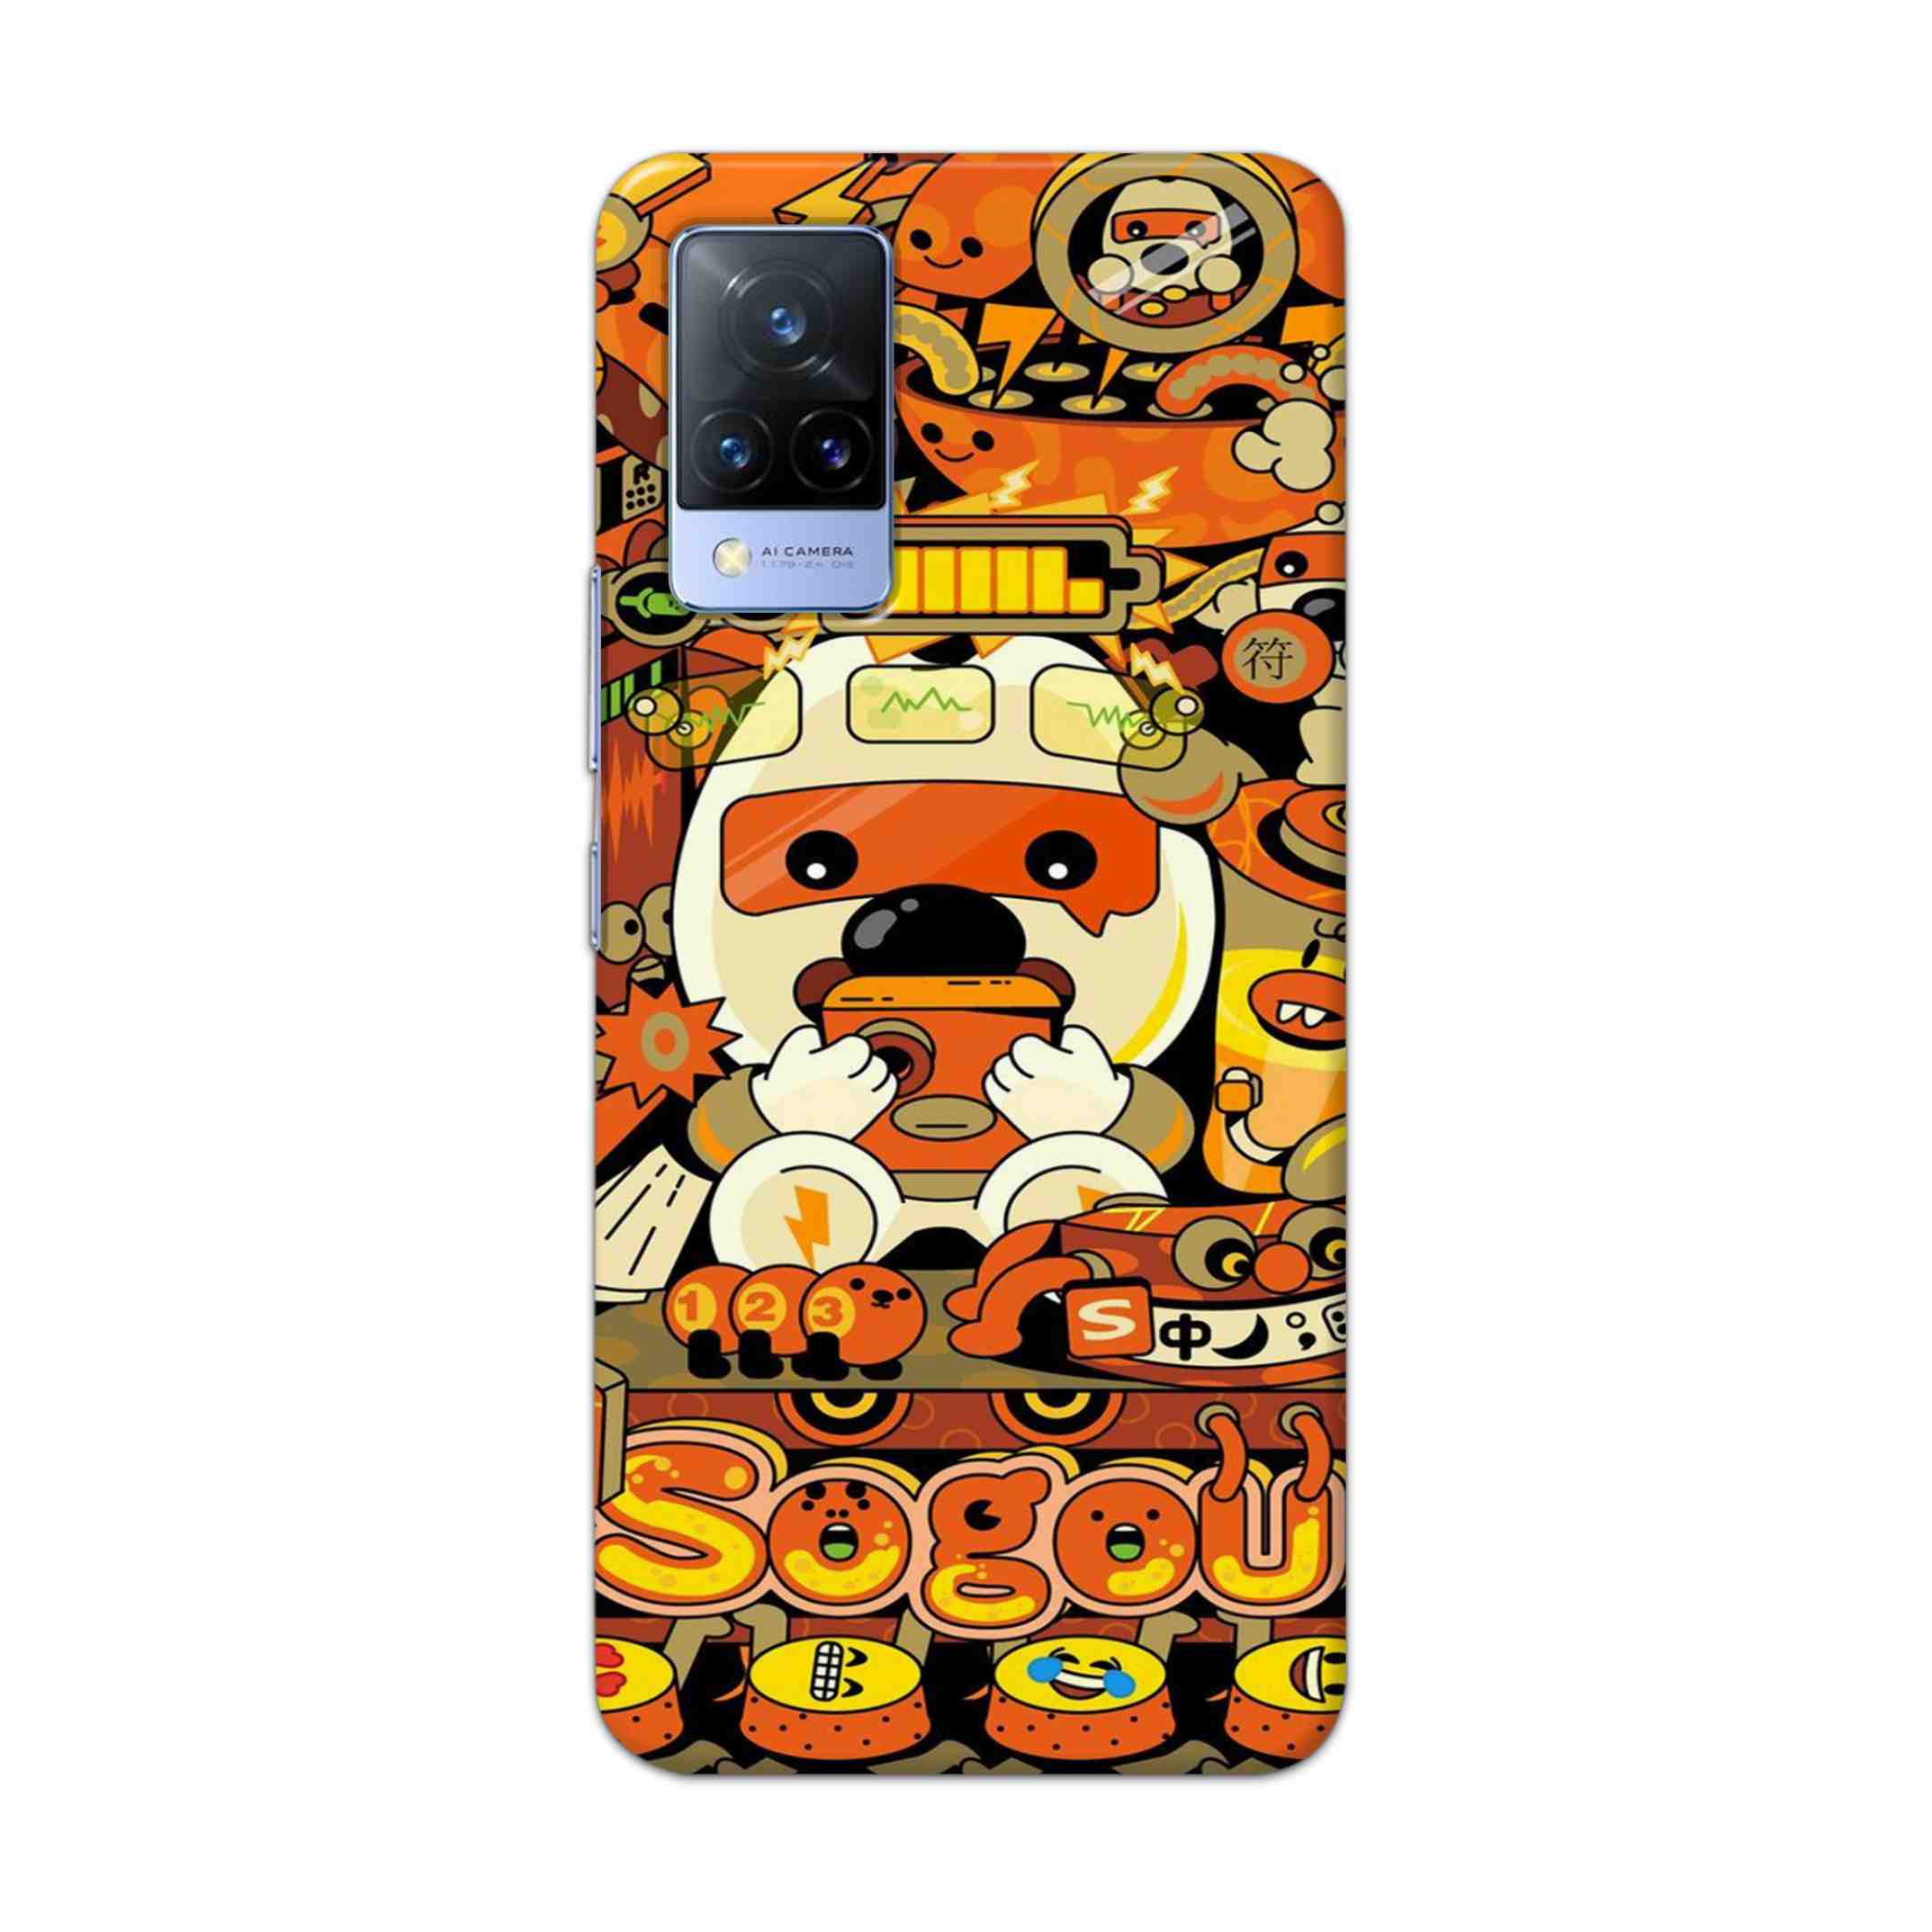 Buy Sogou Hard Back Mobile Phone Case Cover For Vivo V21 Online